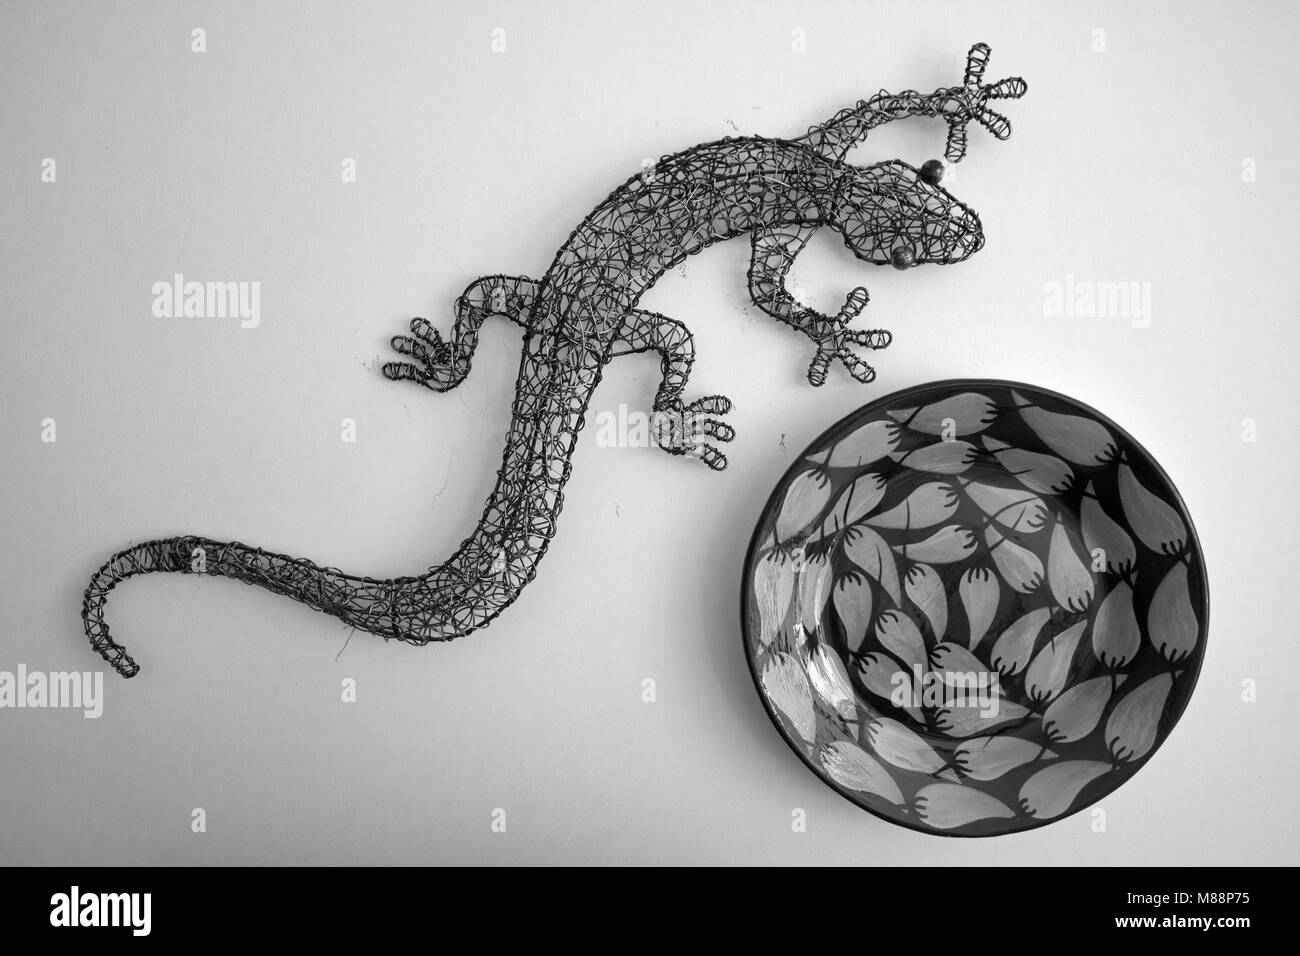 Gecko métal et bol conçu Chili Banque D'Images